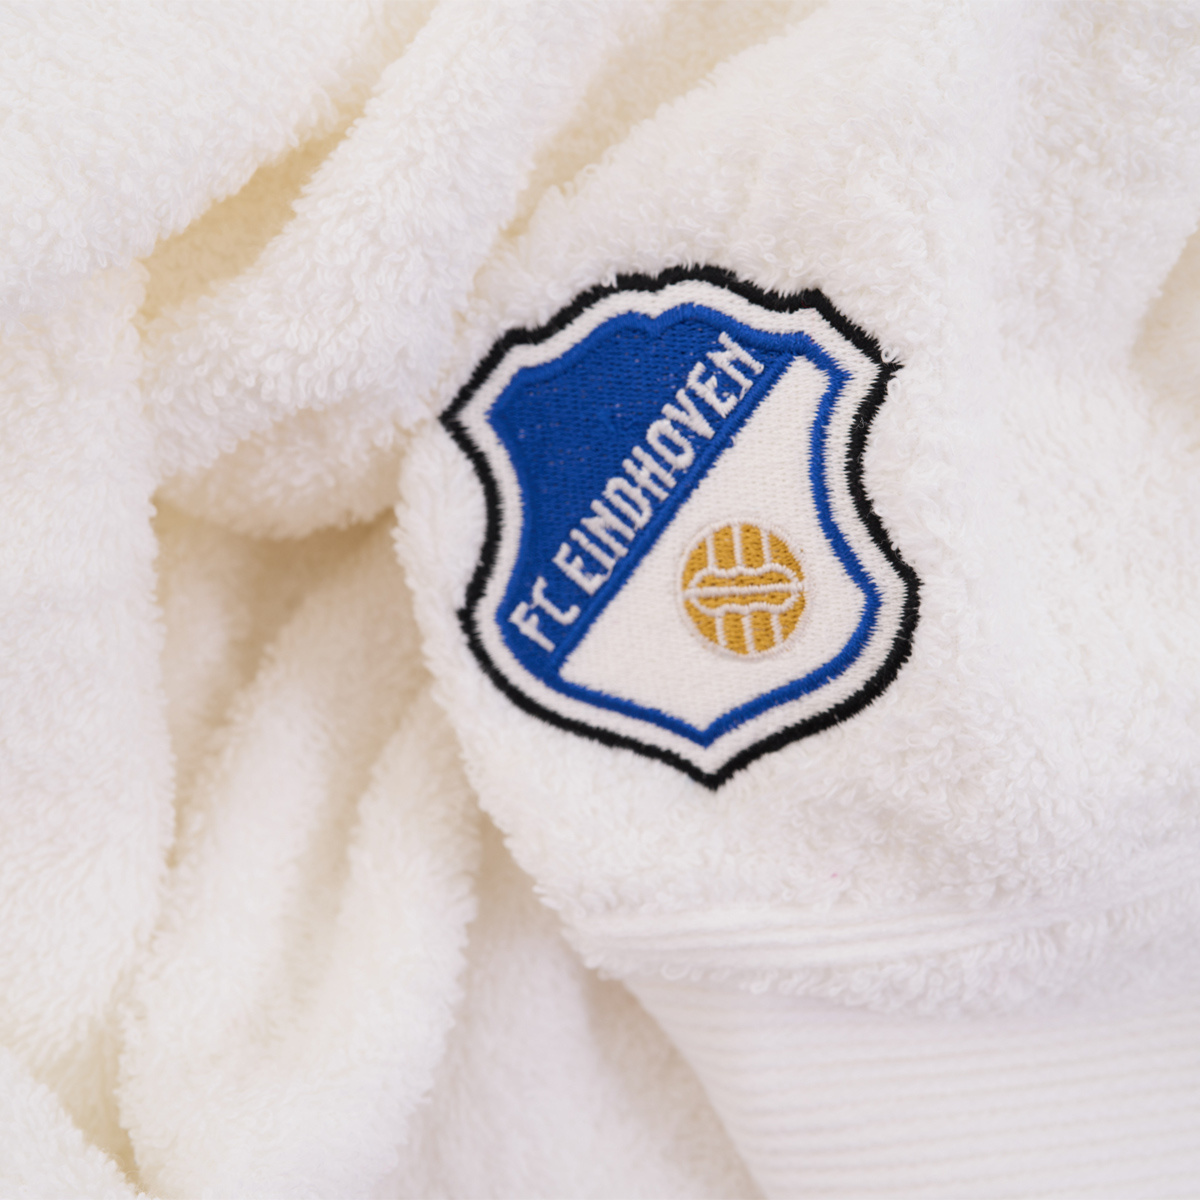 Topfanz Towel 70x140 White logo